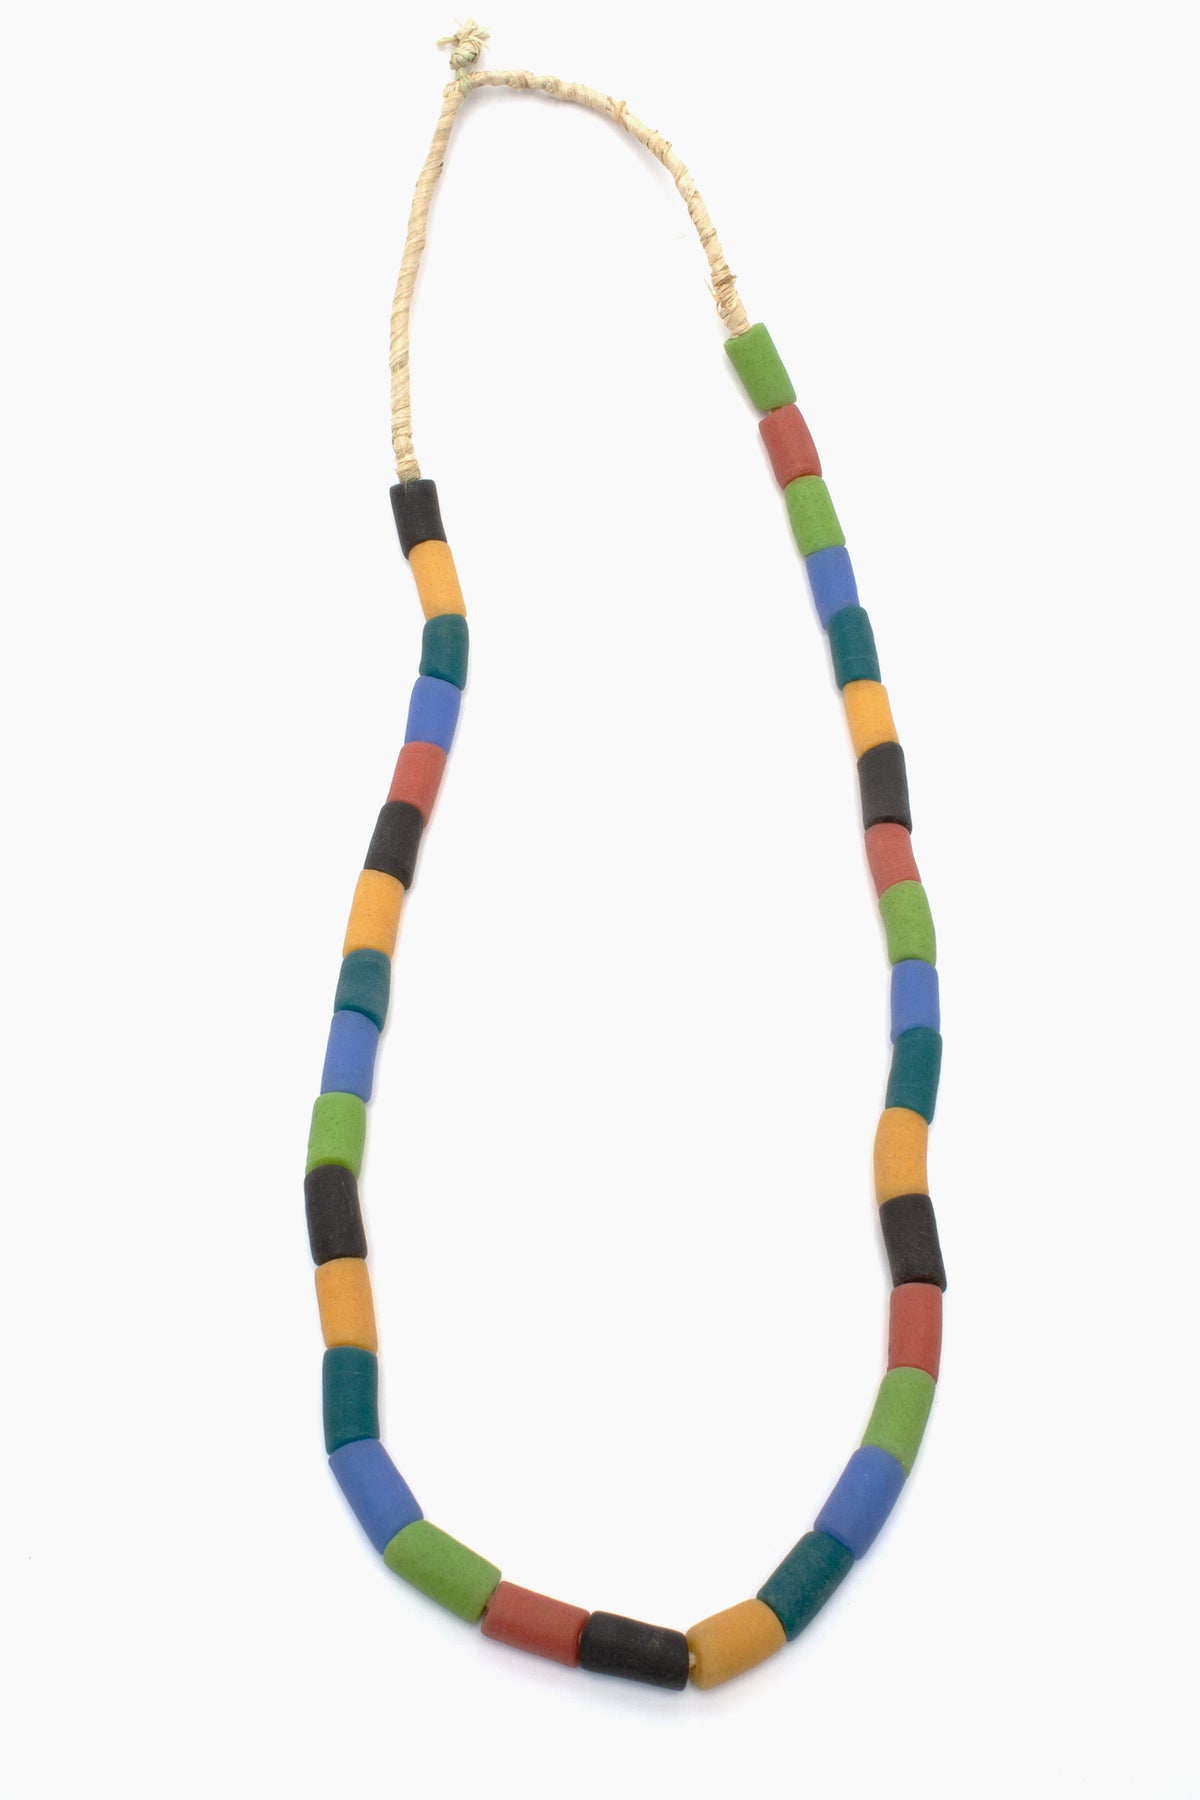 Strand of Bold, Bright Tube Beads from Ghana